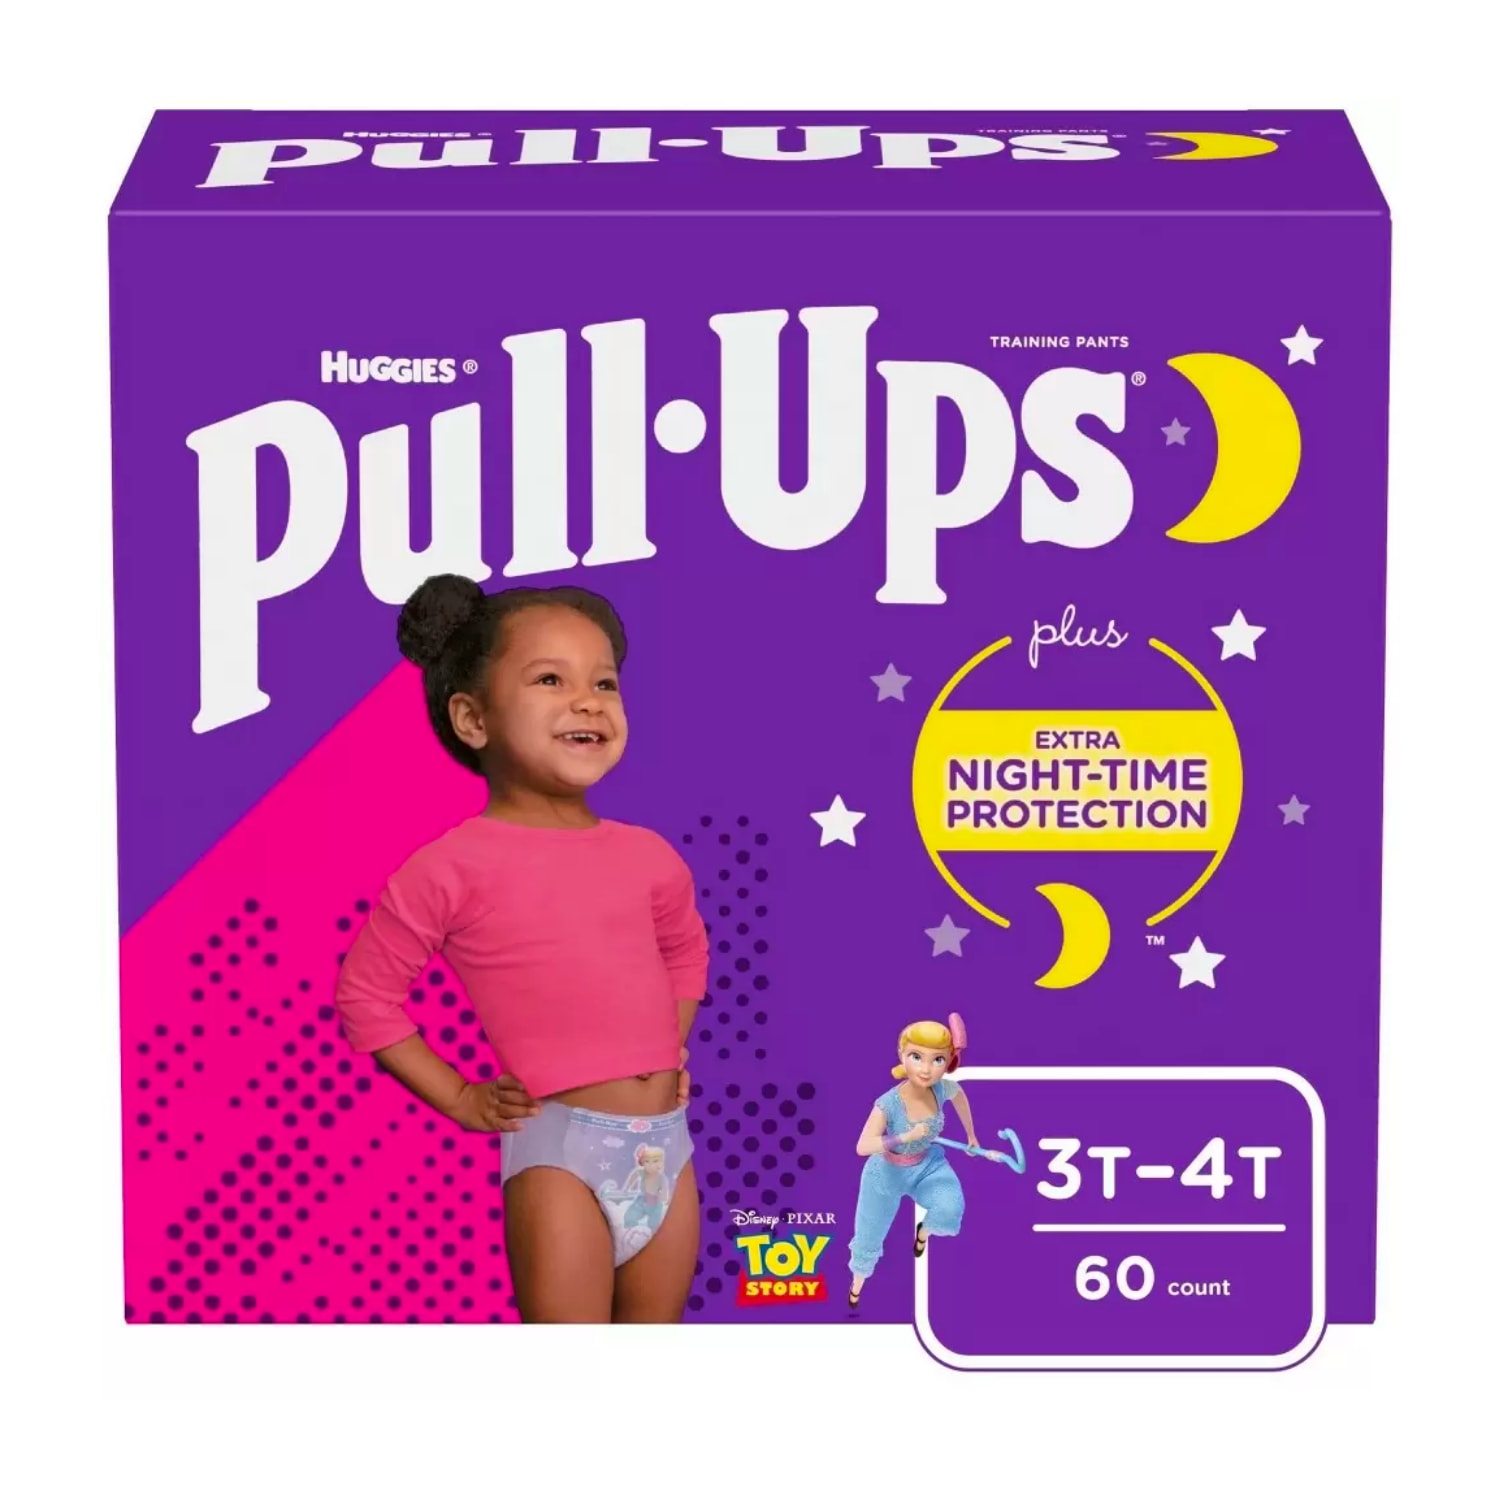 Huggies Pull-ups Plus Training Pants 3T to 4T Girl, 116 units